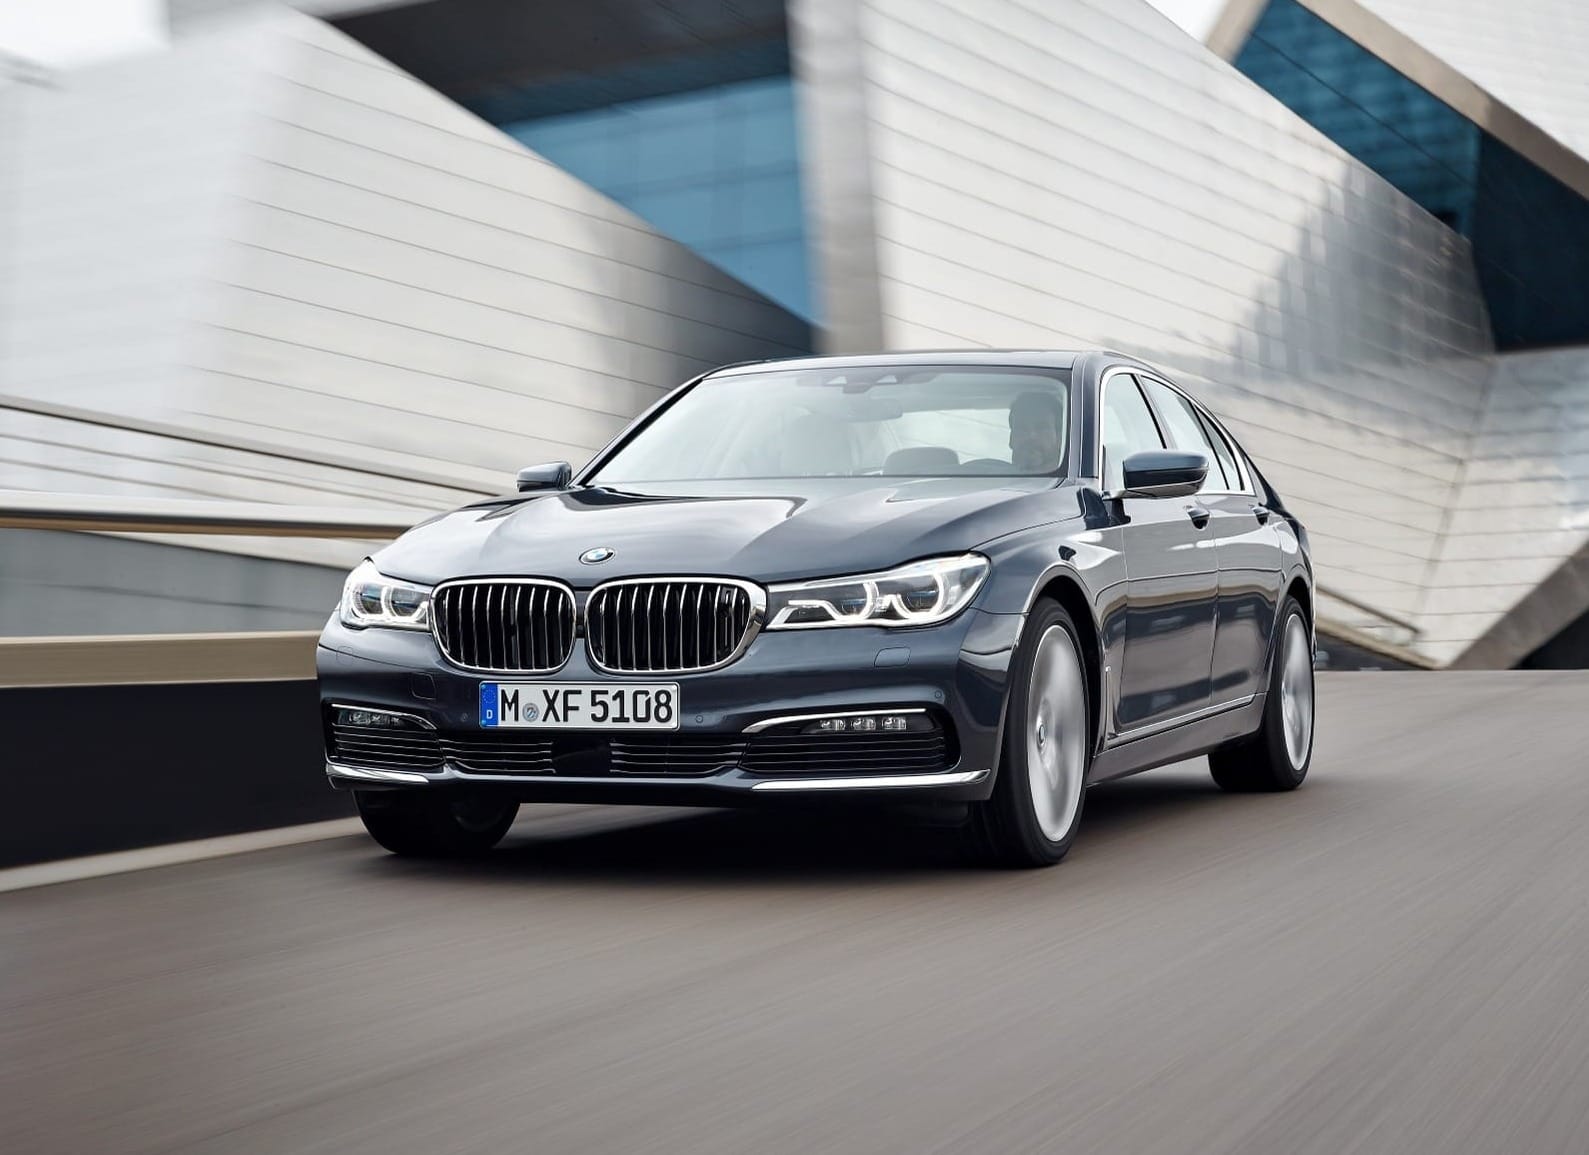 Bang for Your Bimmer Bucks: Top BMW Steals Under $20K